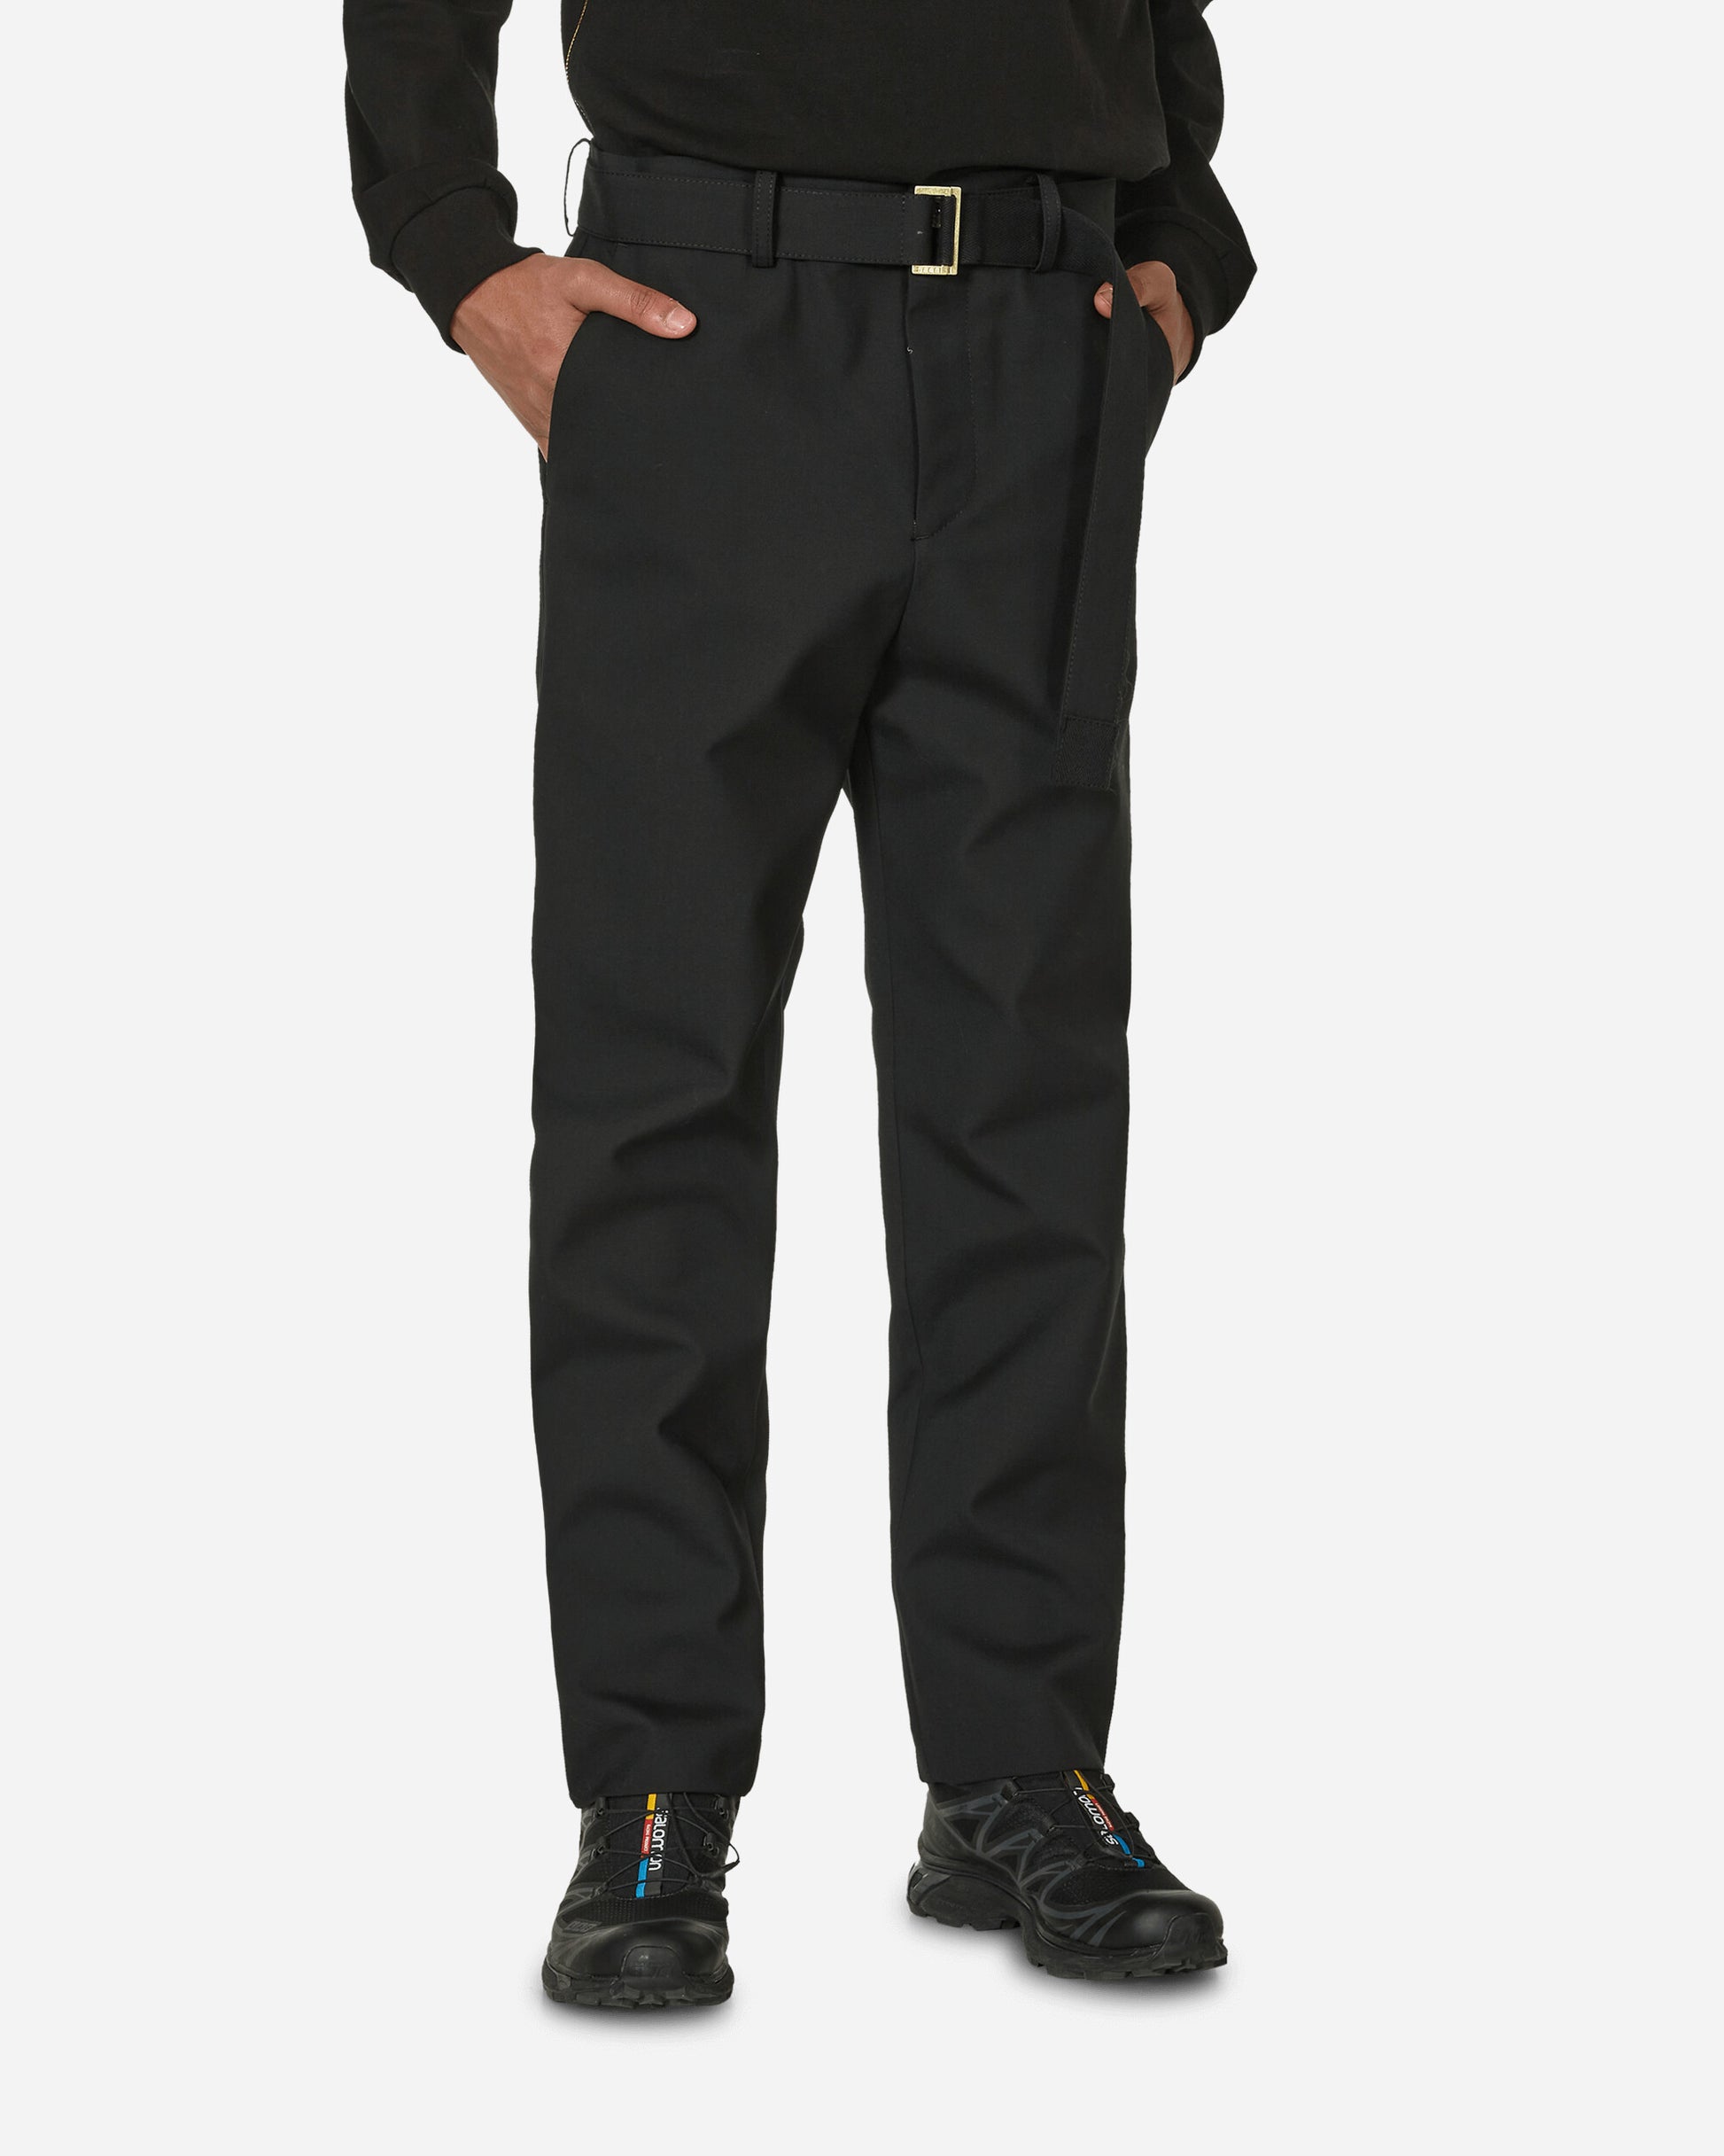 sacai Sacai X Carhartt Wip Suiting Bonding Pants Black Pants Trousers 24-03389M 001